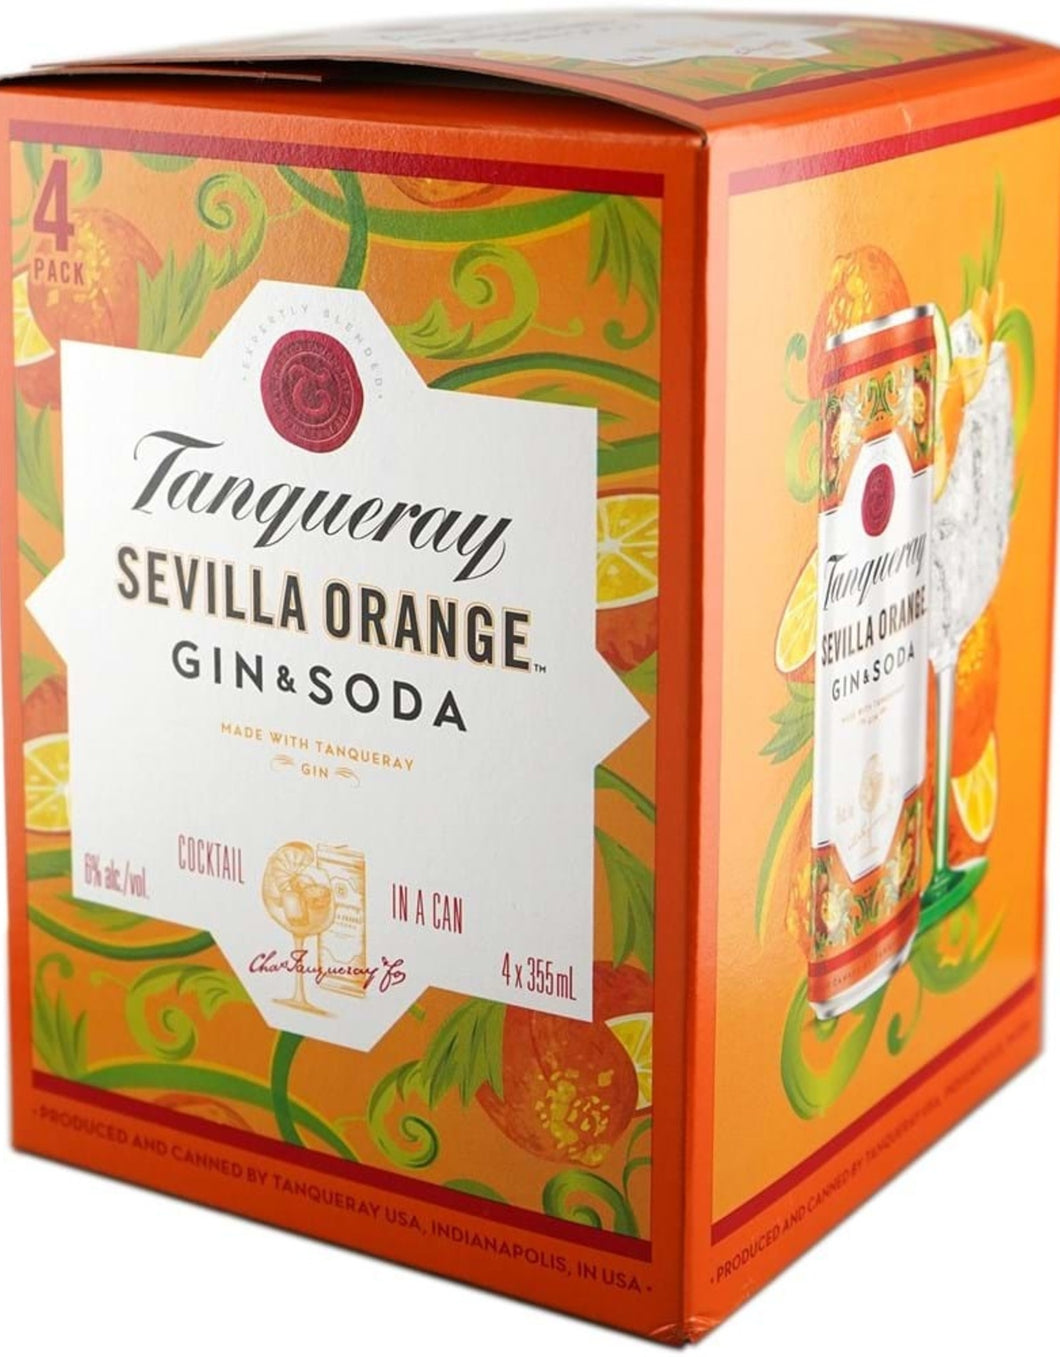 Tanqueray SeVilla Orange Gin & Soda 4-PACK (4 x 12 fl oz)